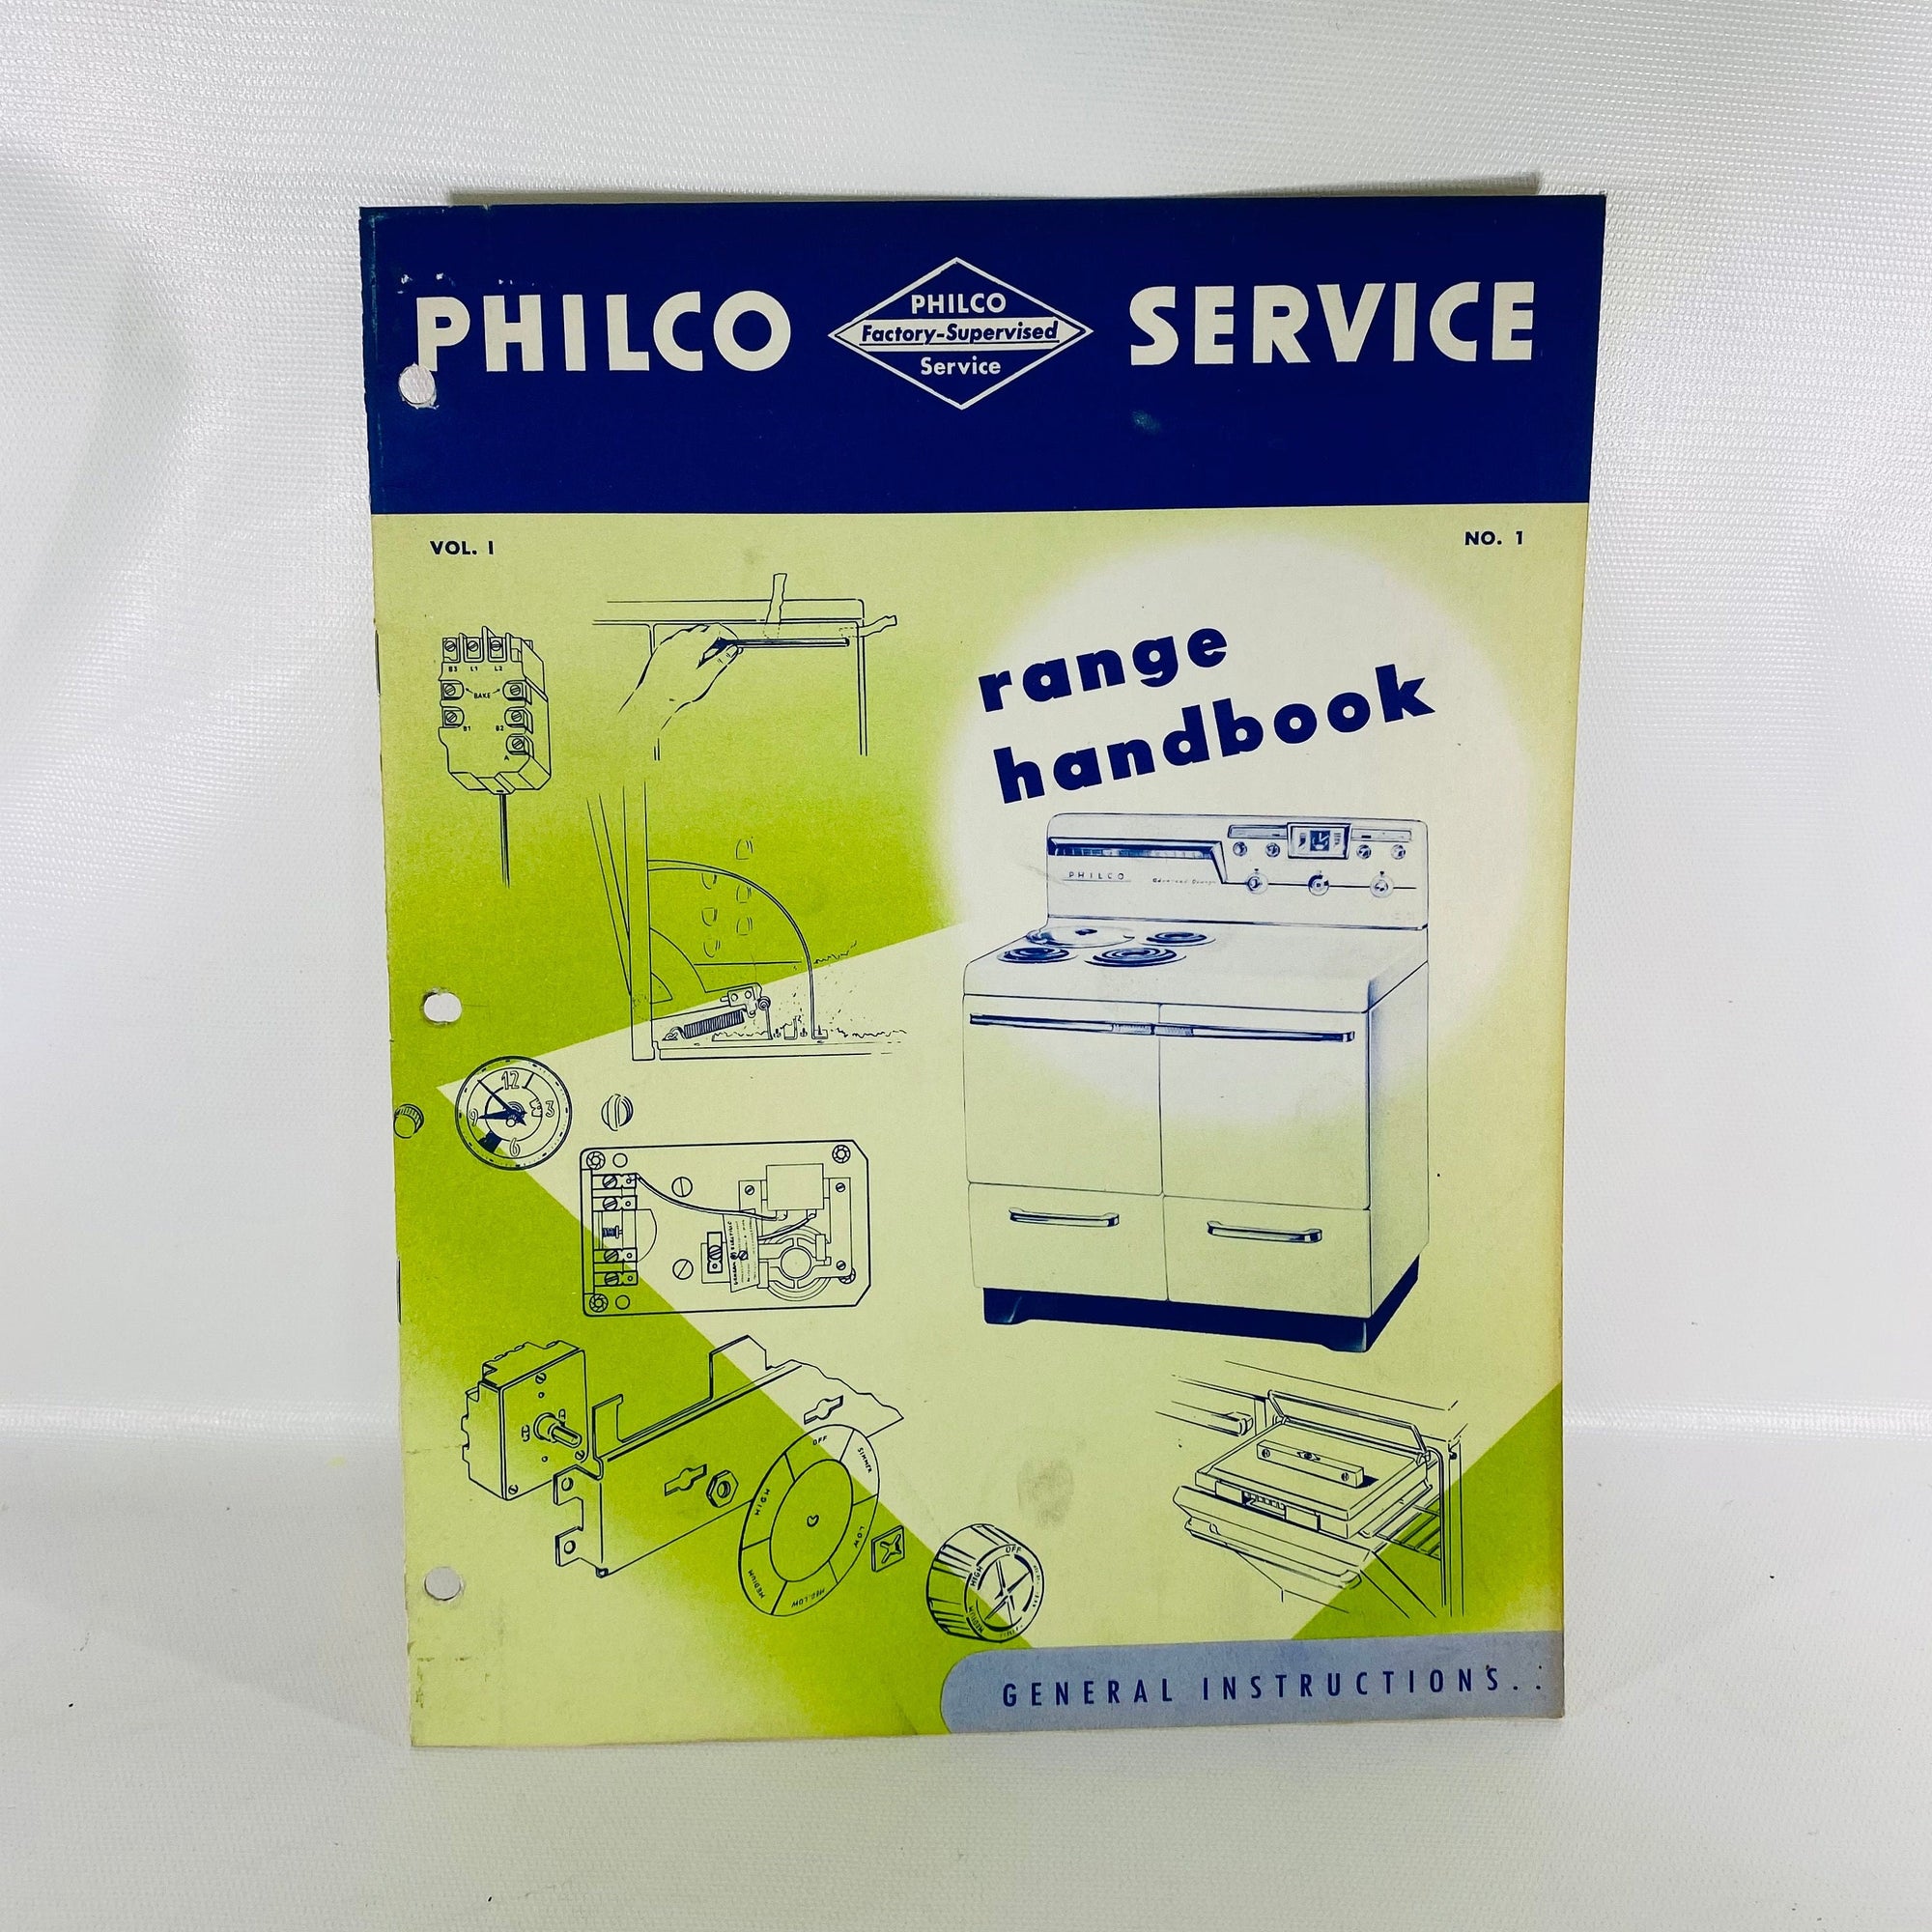 Philco Range Handbook with General Instructions PR-2134 Vol One 1951 Philco Corporation